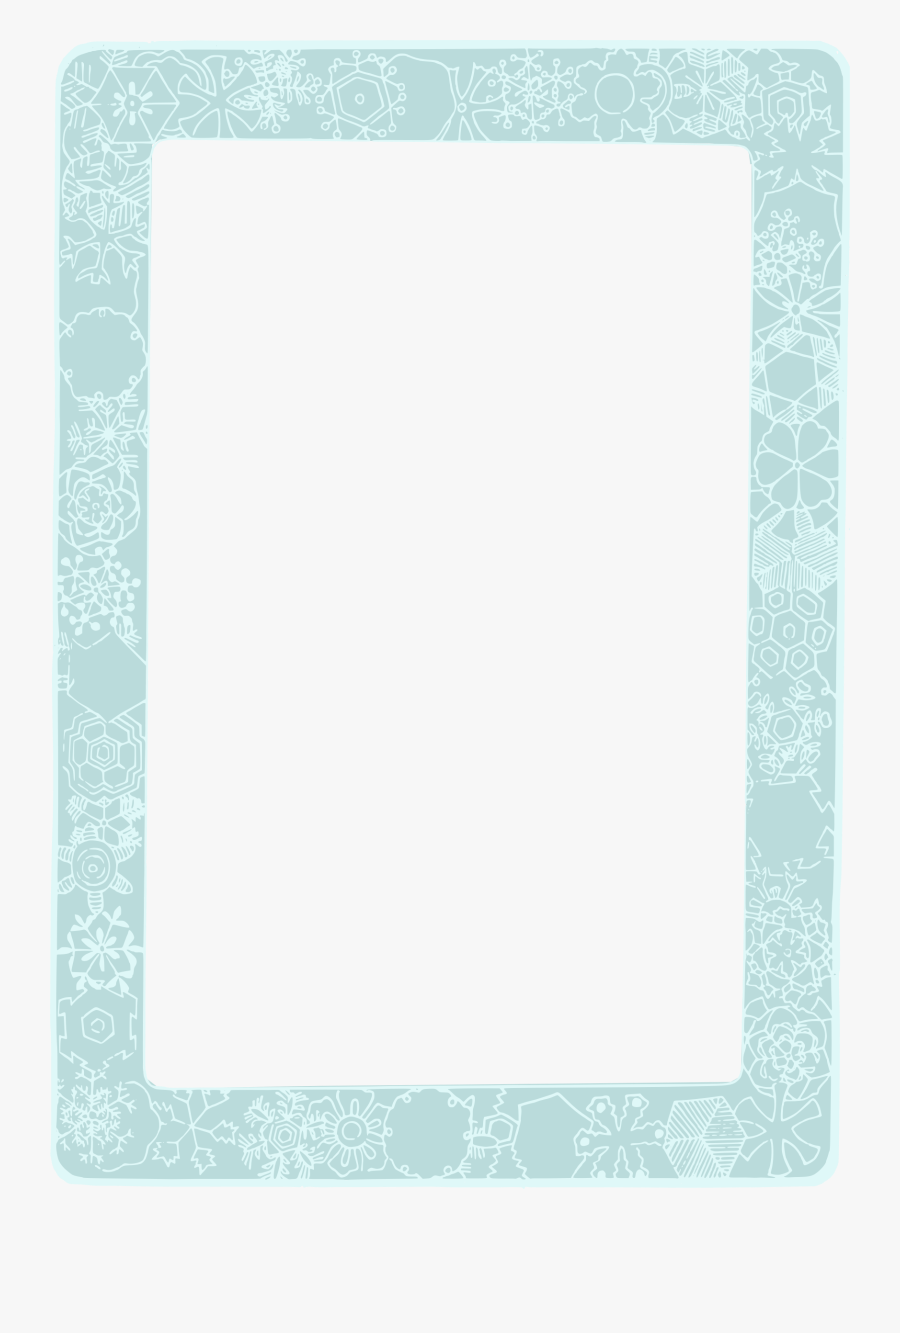 Snowflake - Colour Frame - Paper Product, Transparent Clipart